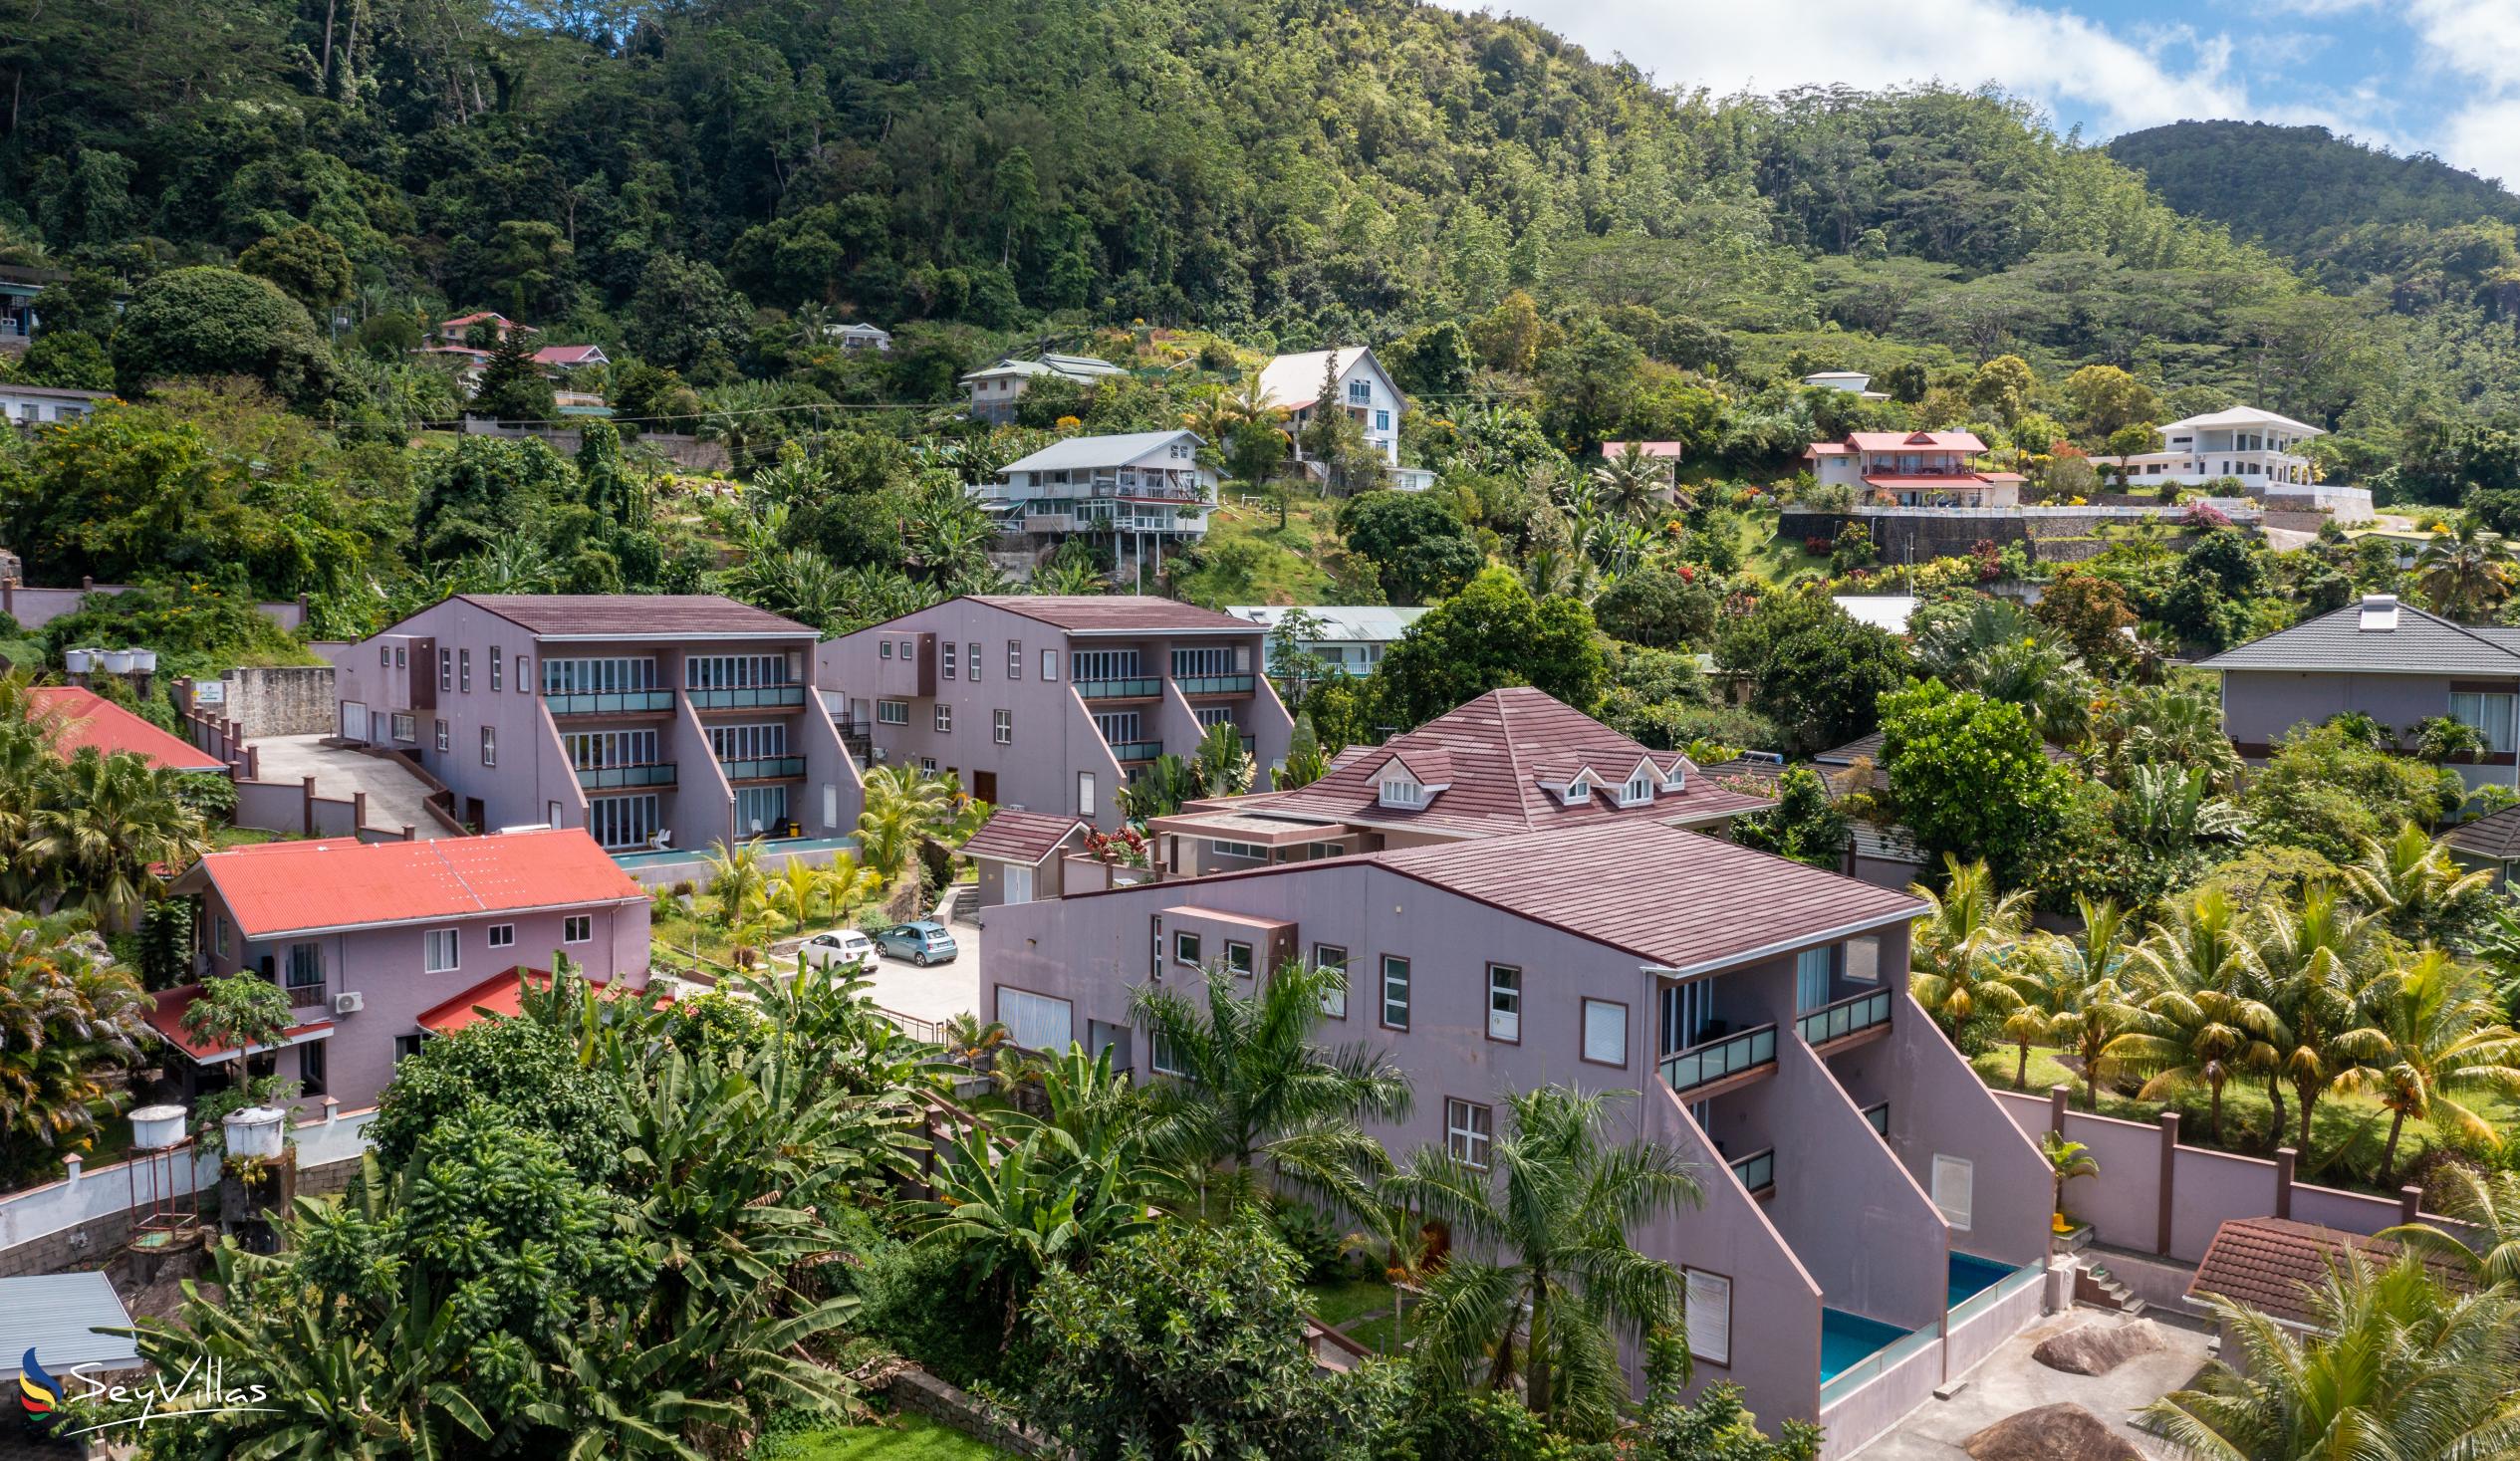 Foto 17: Cliffhanger Villas - Aussenbereich - Mahé (Seychellen)